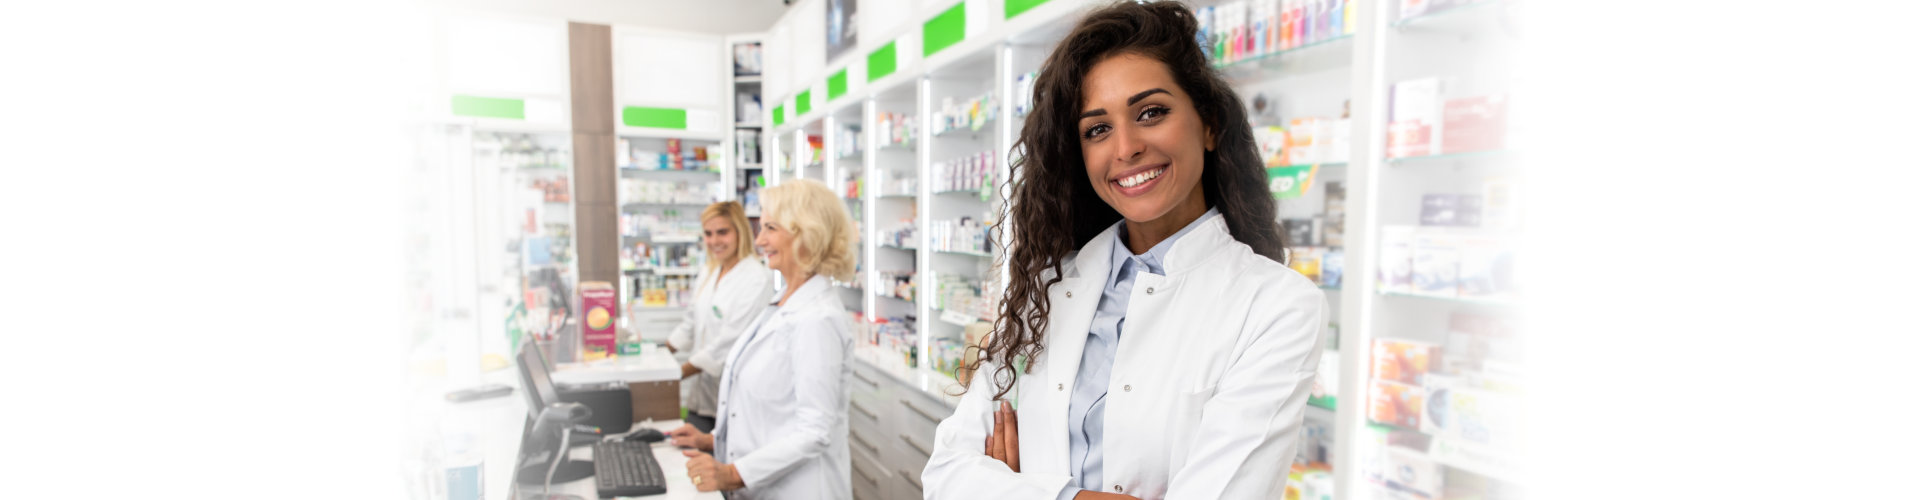 lady pharmacist smiling